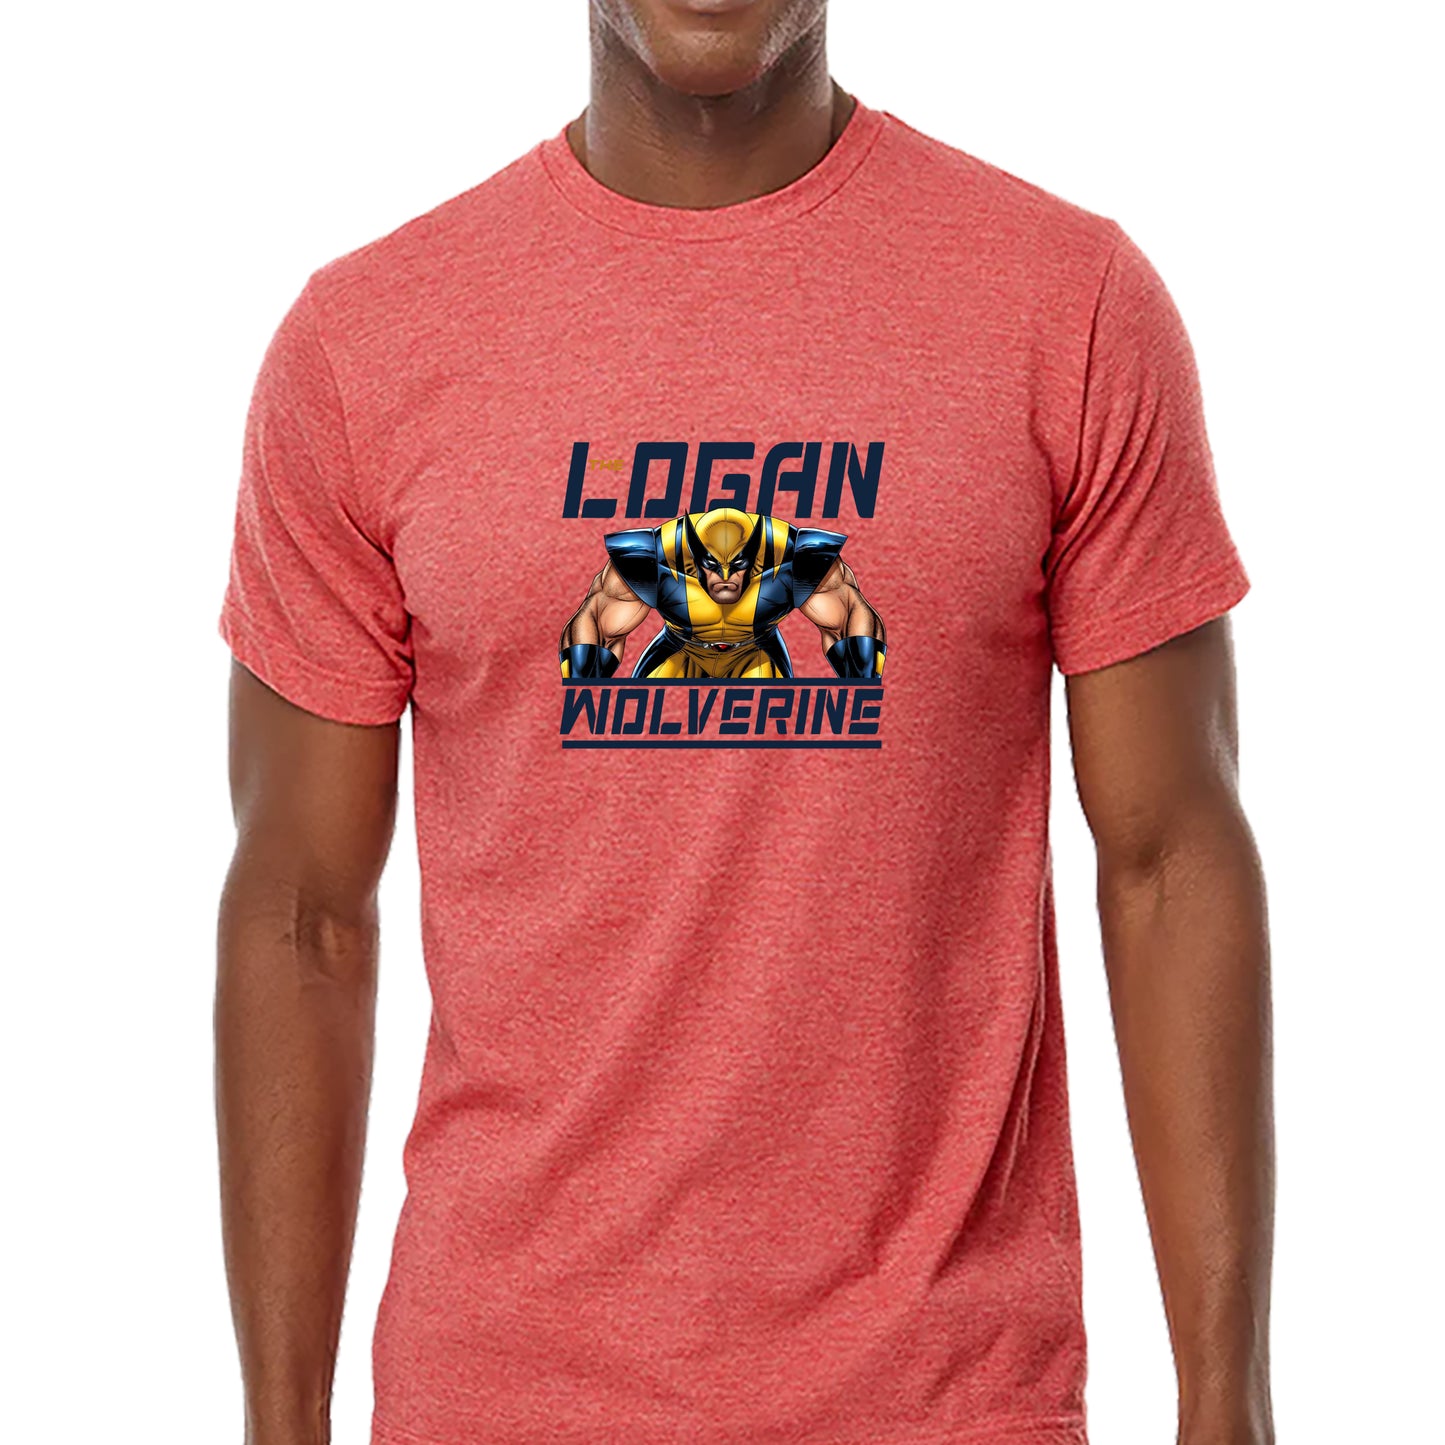 The Logan T-shirt